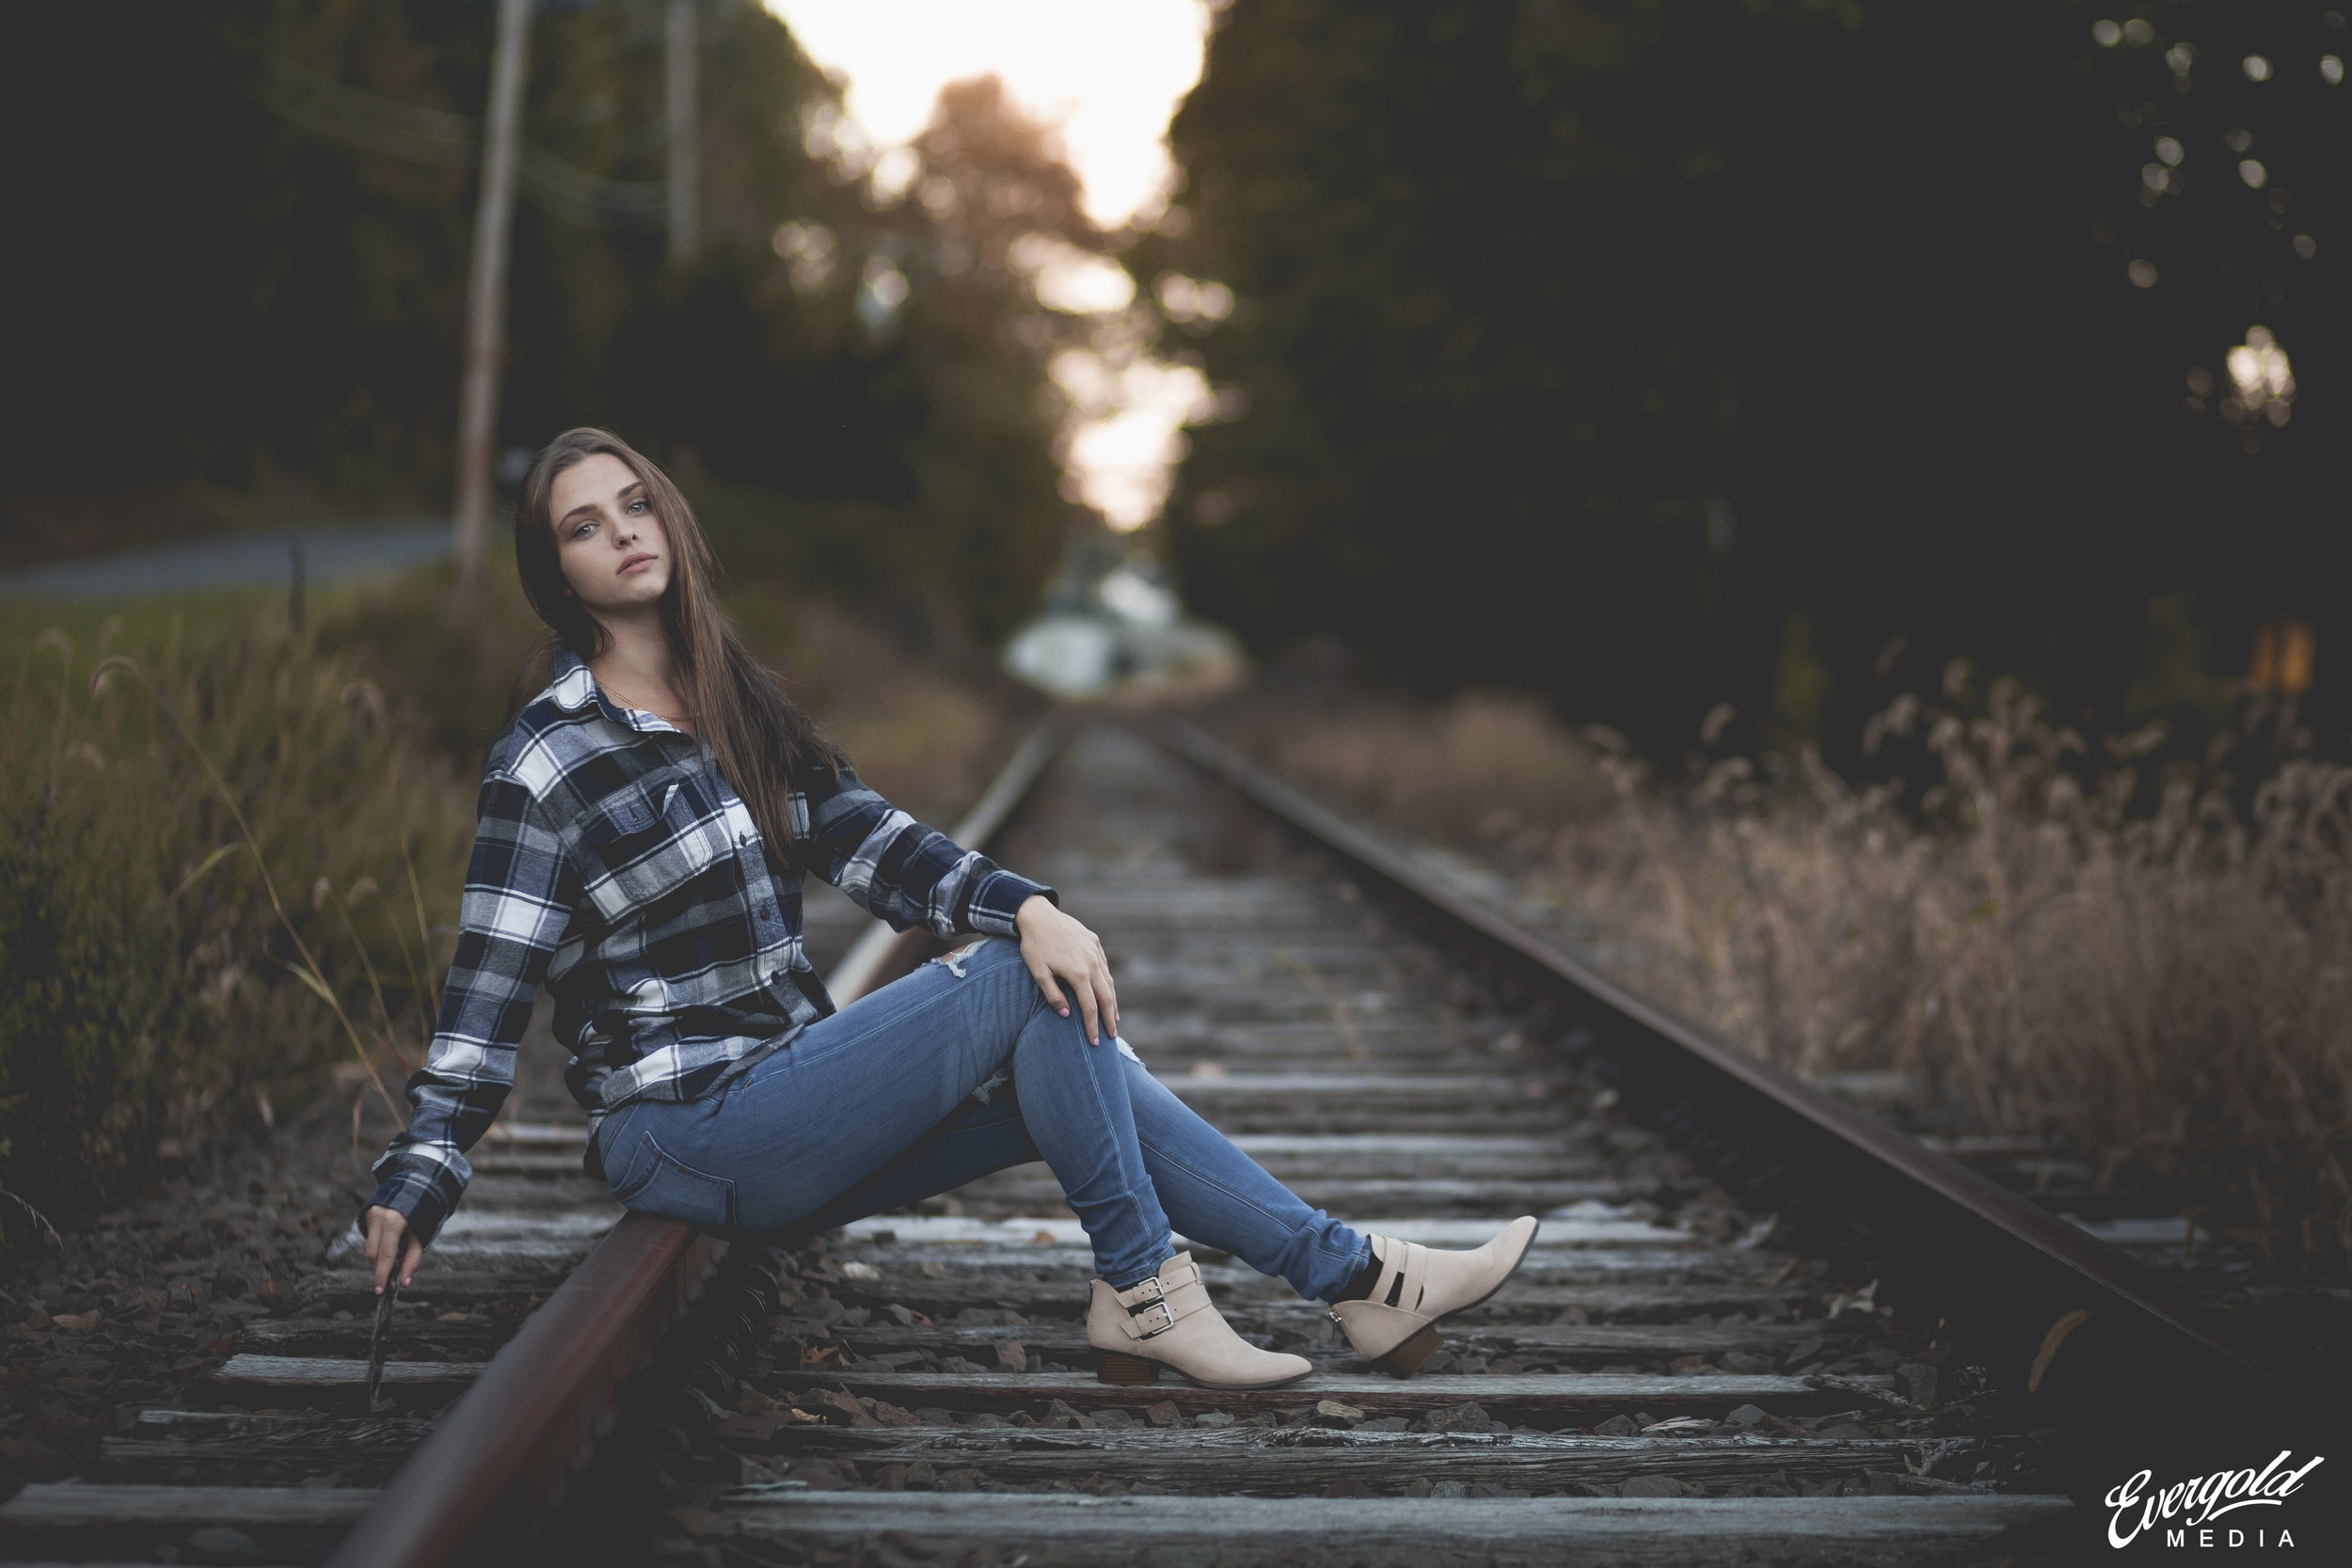 Women Model Shirt Torn Jeans Booties Railway Sitting Looking At Viewer Blue Eyes Plaid Shirt Women O 2500x1667